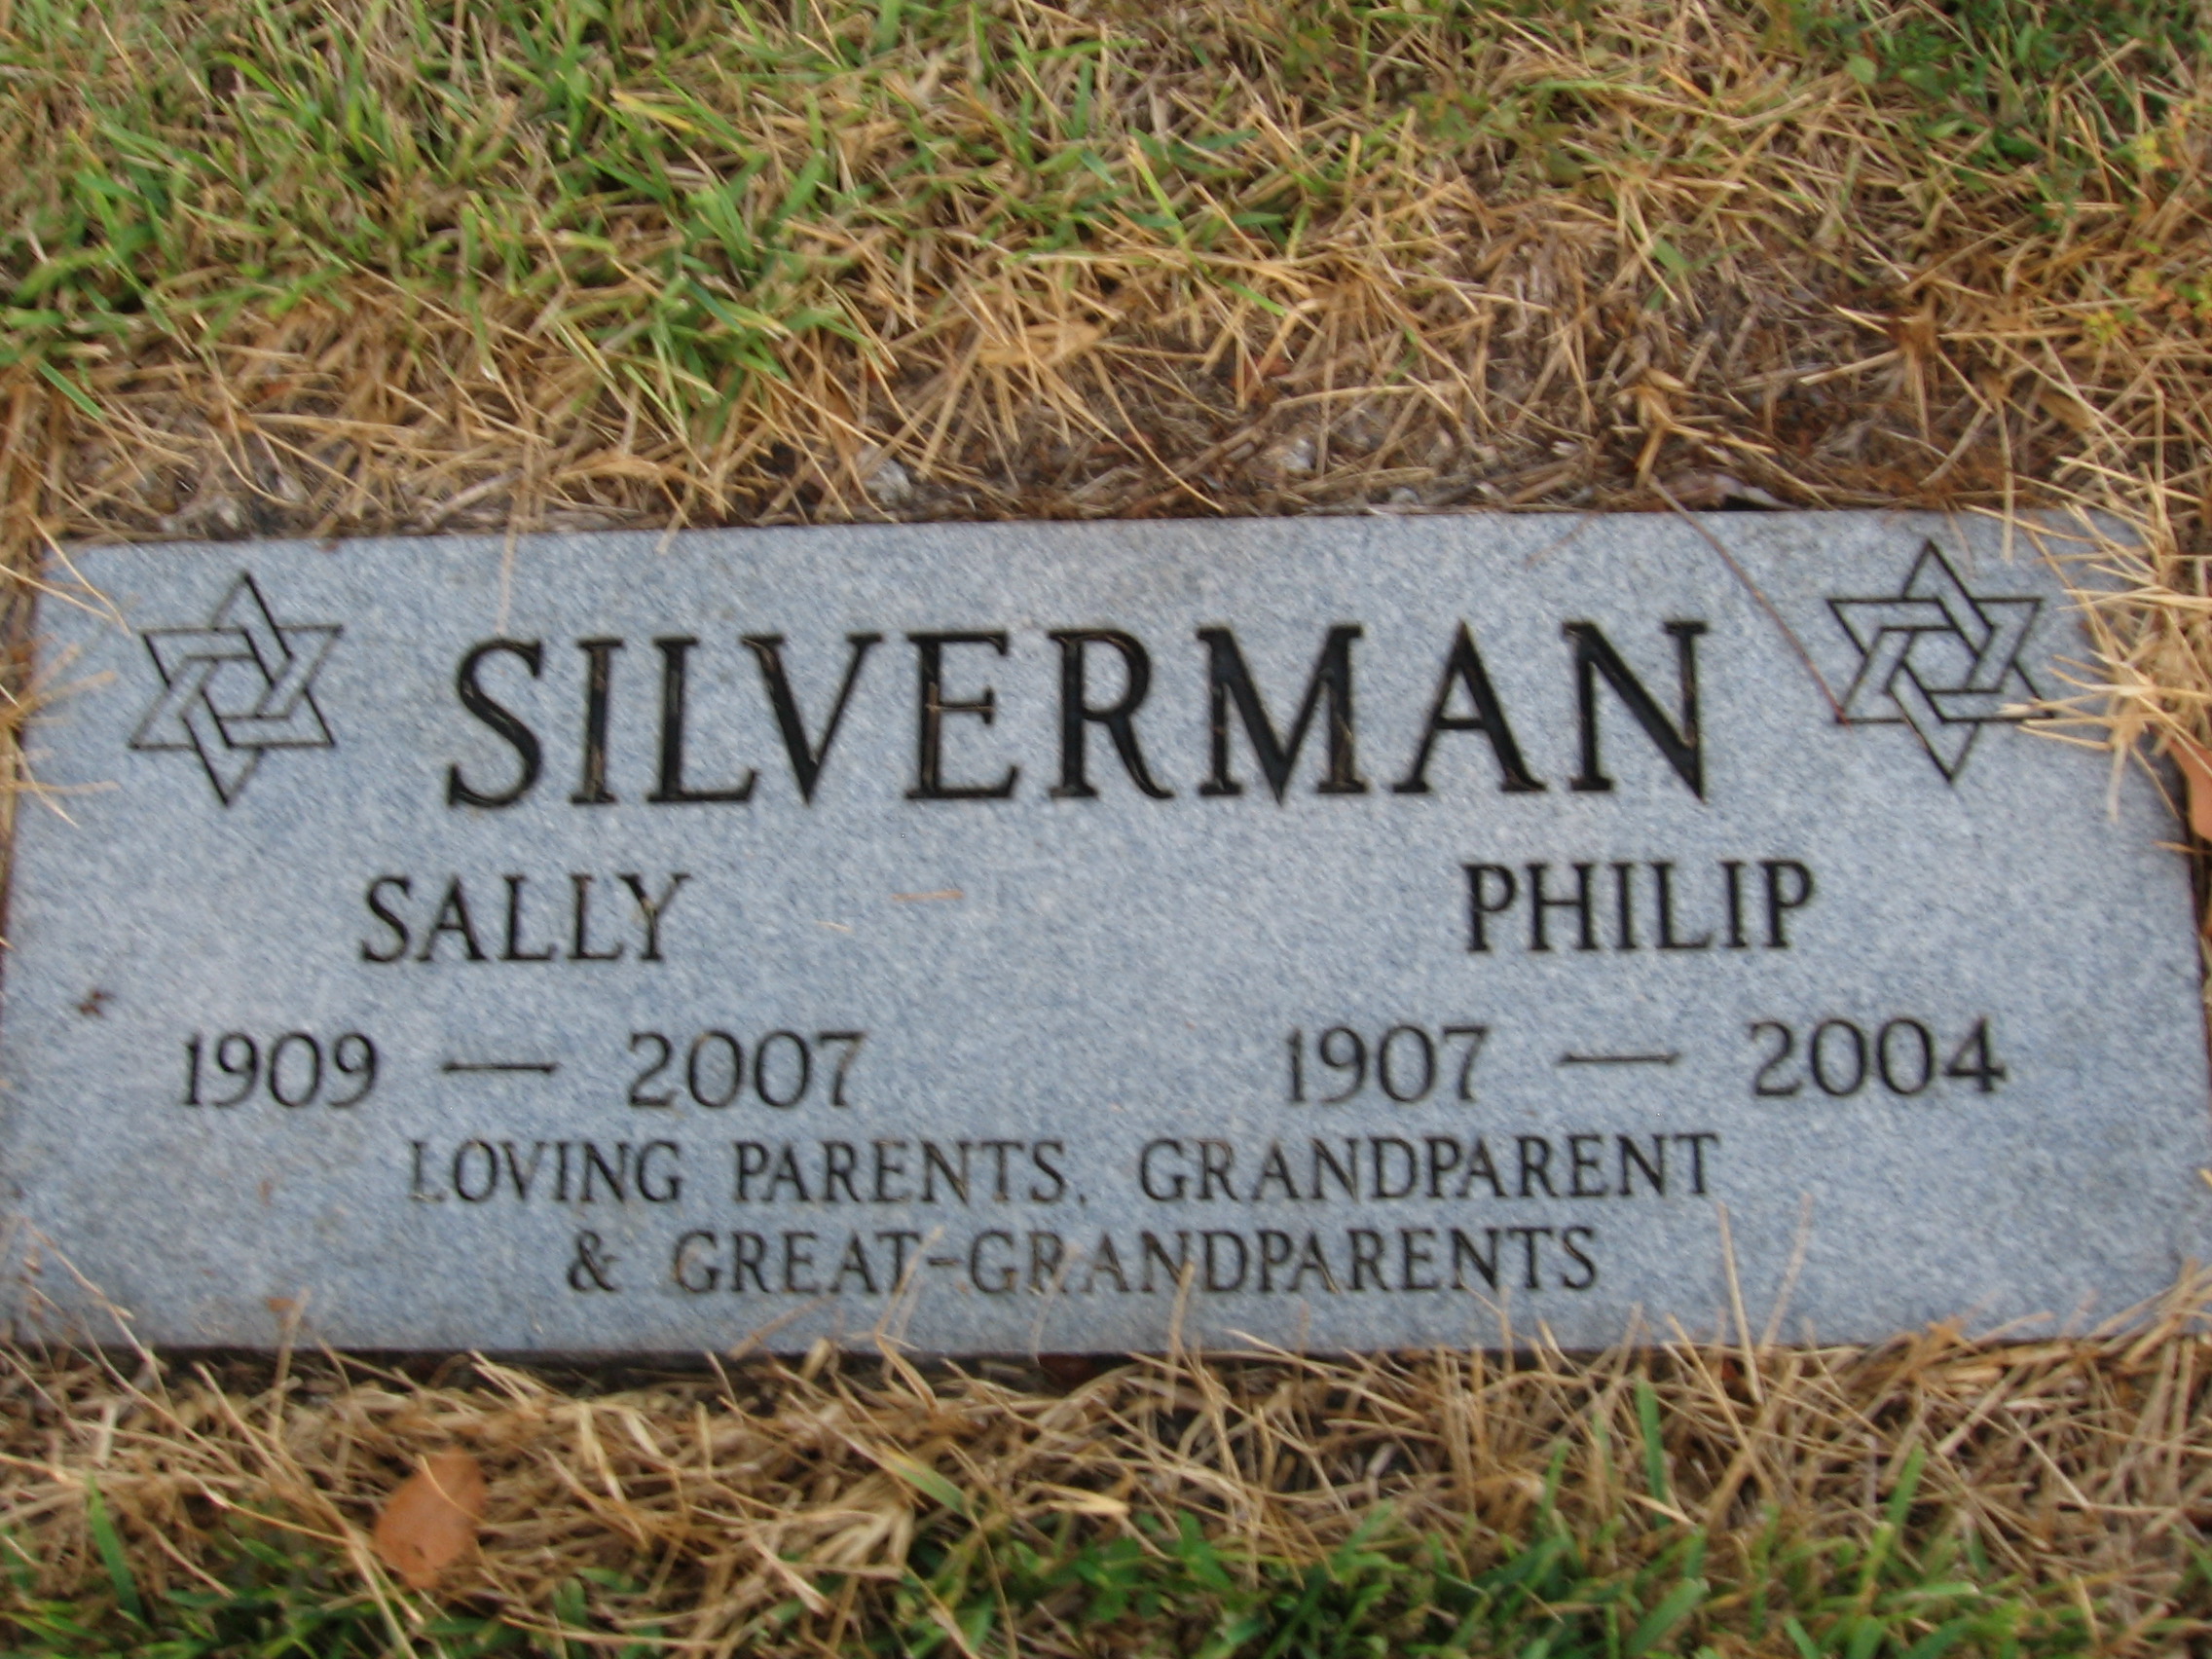 Philip Silverman